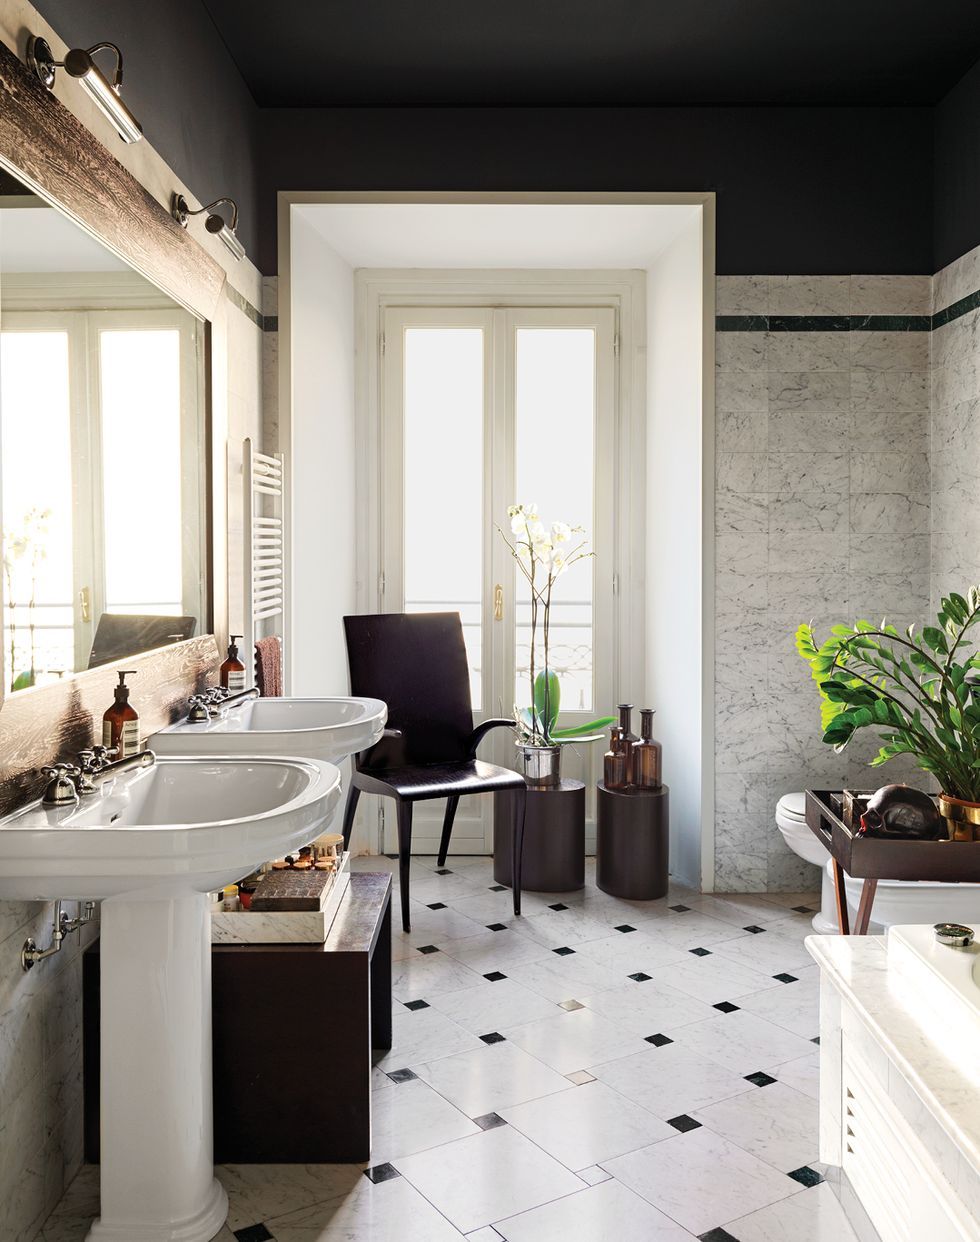 Black And White Bathrooms: Design Ideas, Decor And Accessories